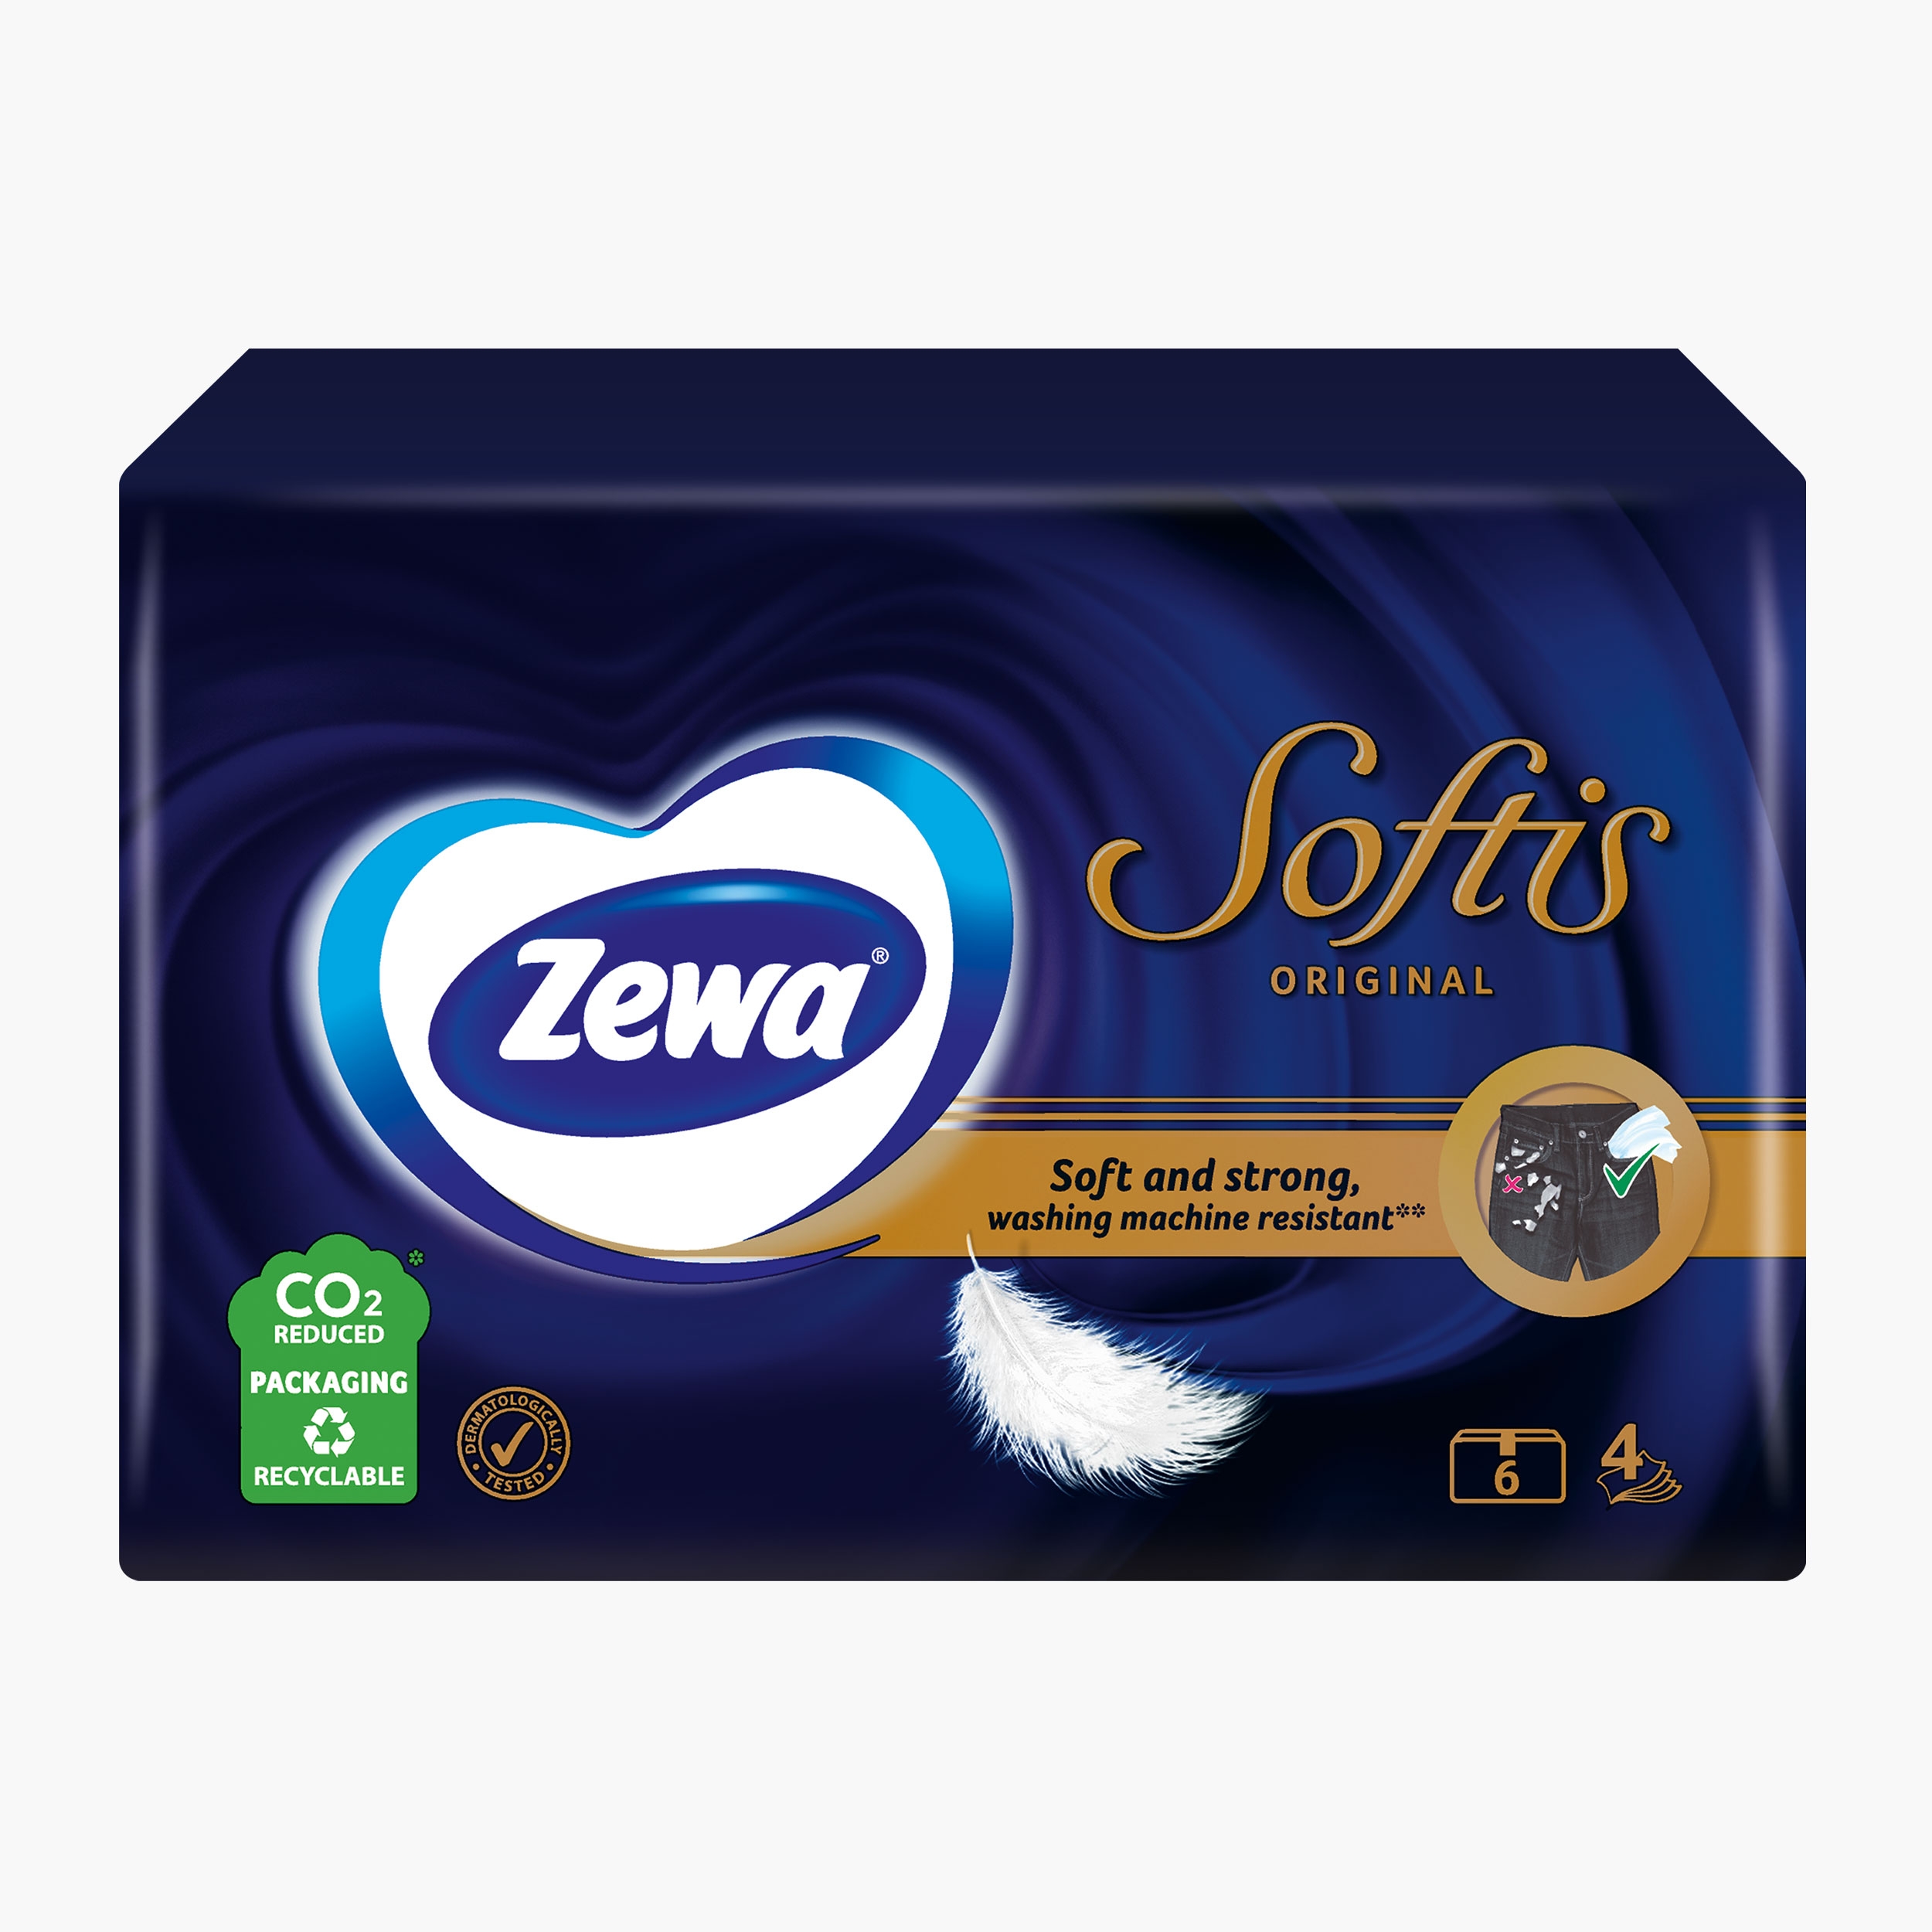 Servetele nazale, ZEWA Softis Original, 4str, 6buc